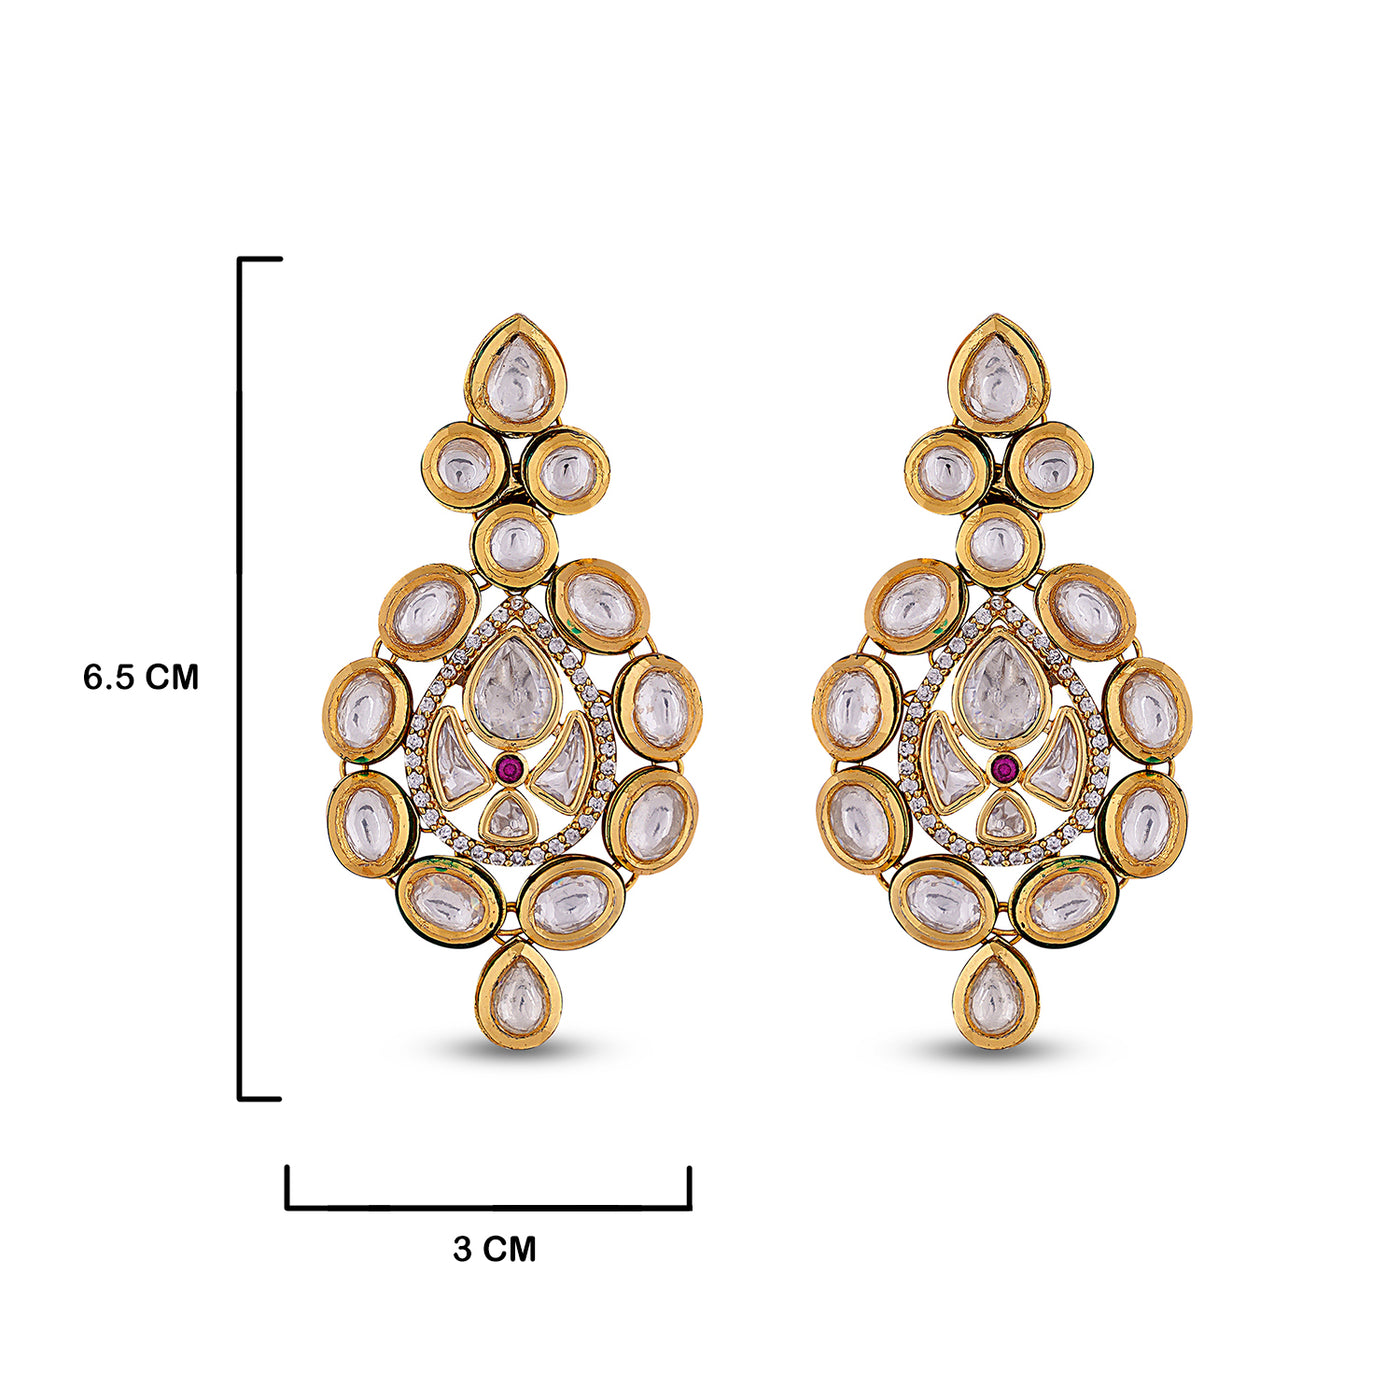 Multi-Layered Kundan Earrings with measurements in cm. 6.5cm by 3cm.